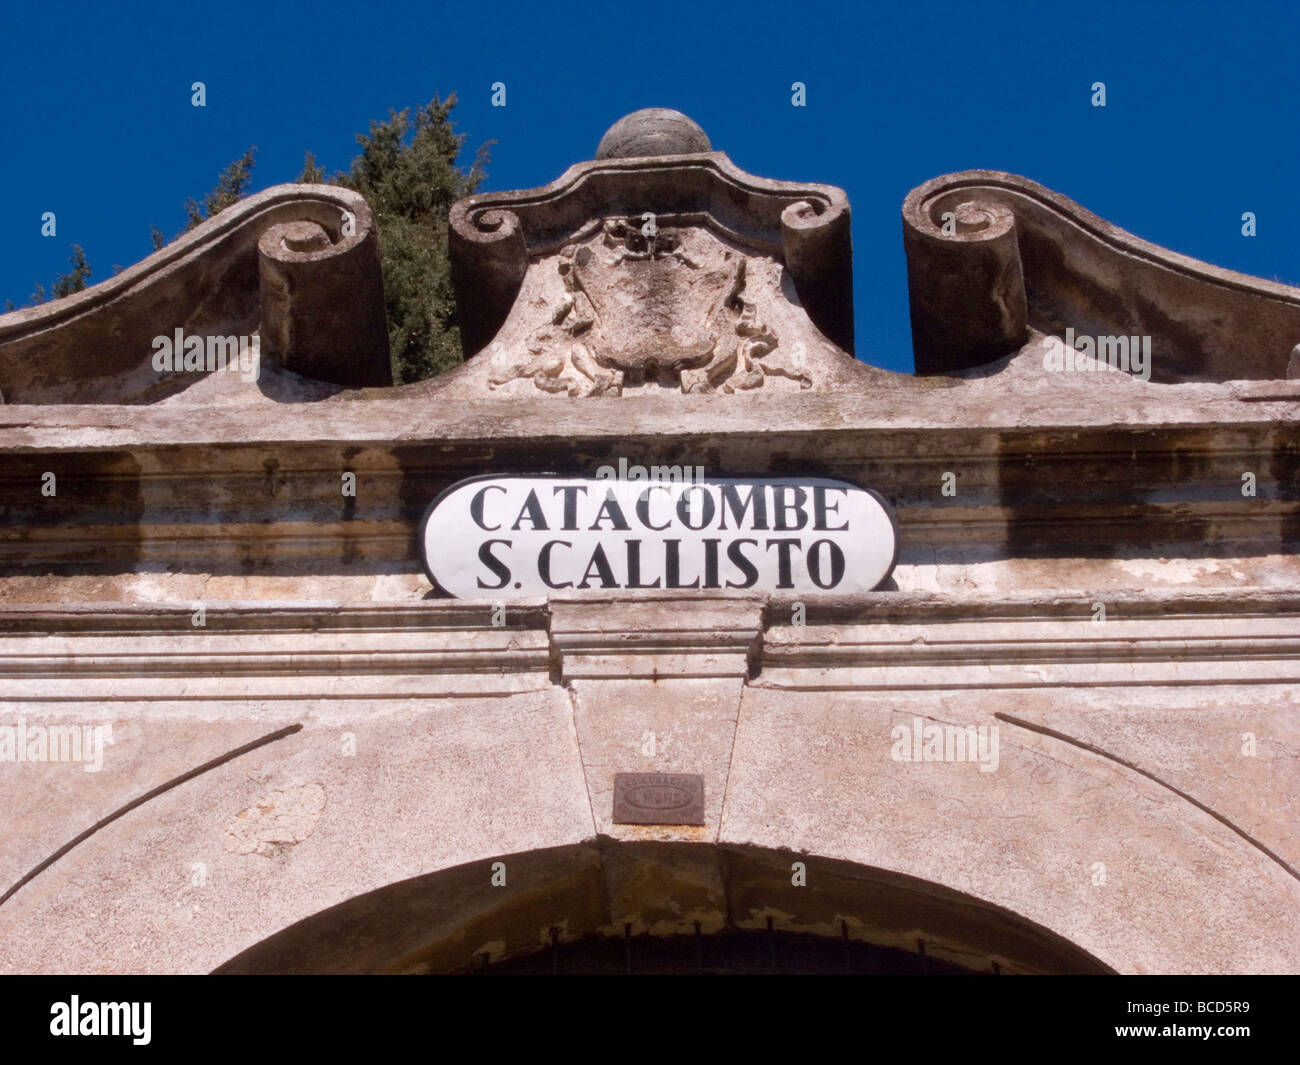 Catacombs of San Callisto Via Appia Rome Italy Stock Photo